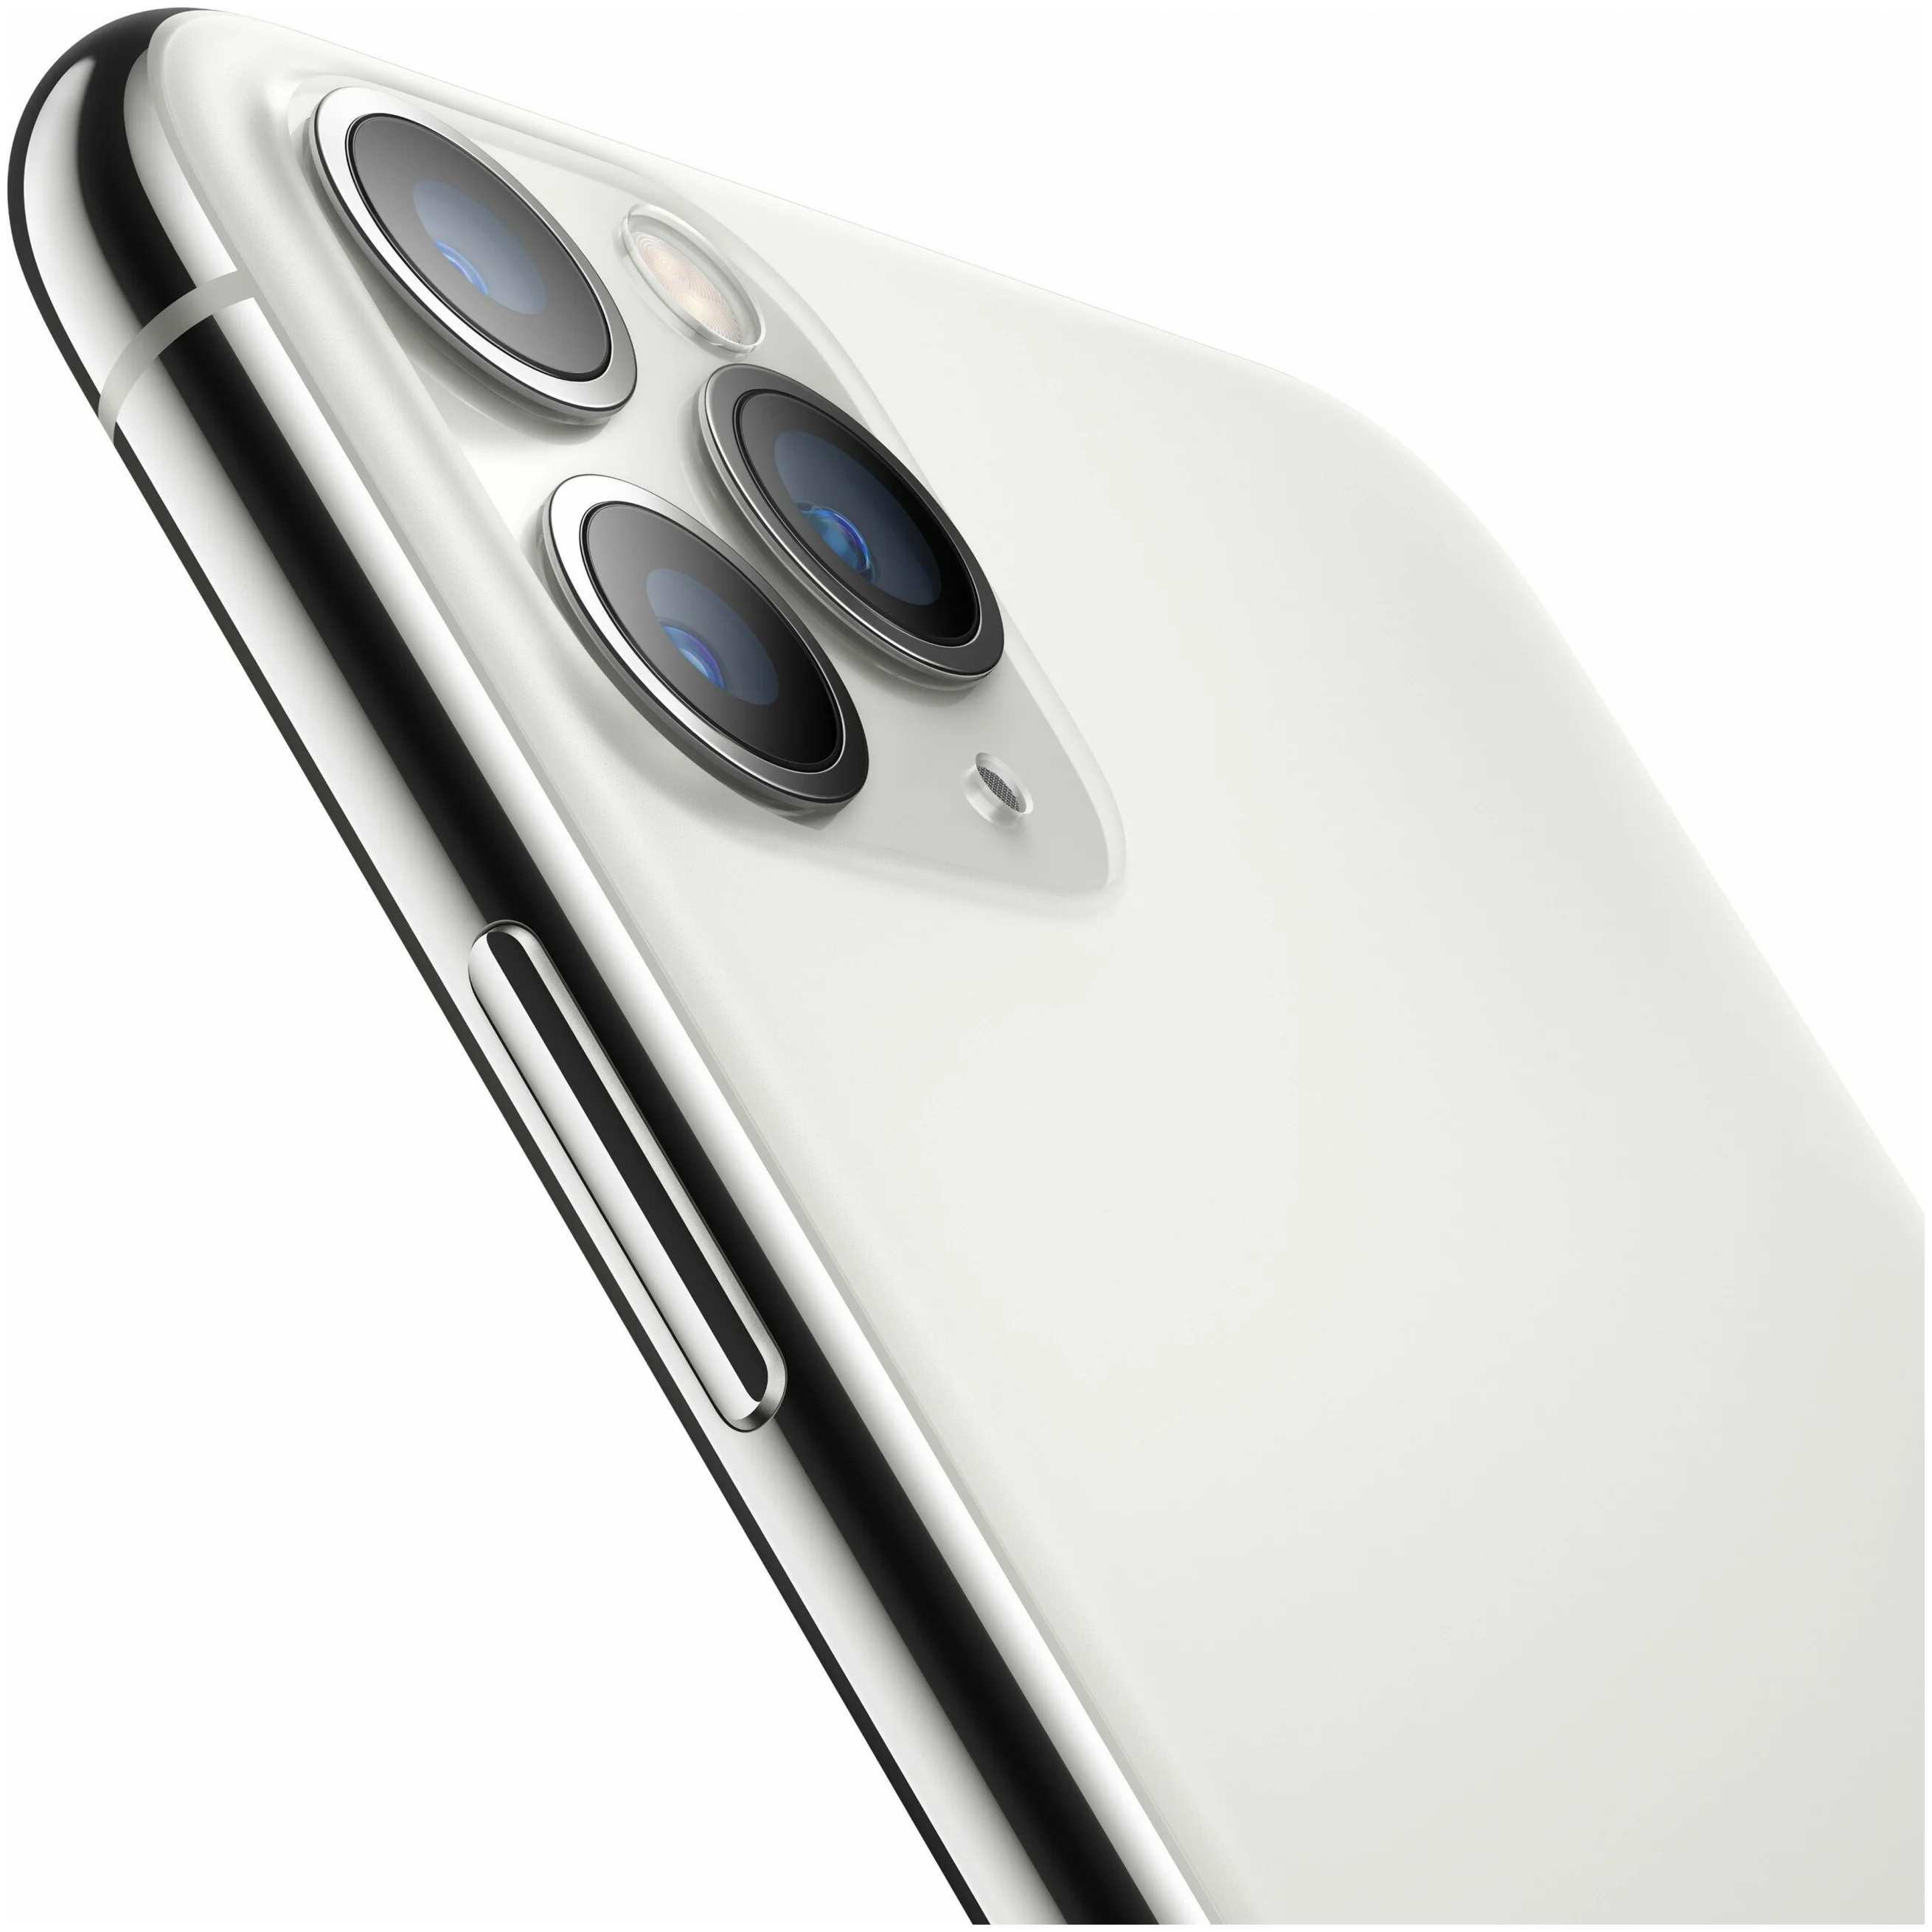 Apple iPhone 11 Pro Max 64GB - степень защиты: IP68